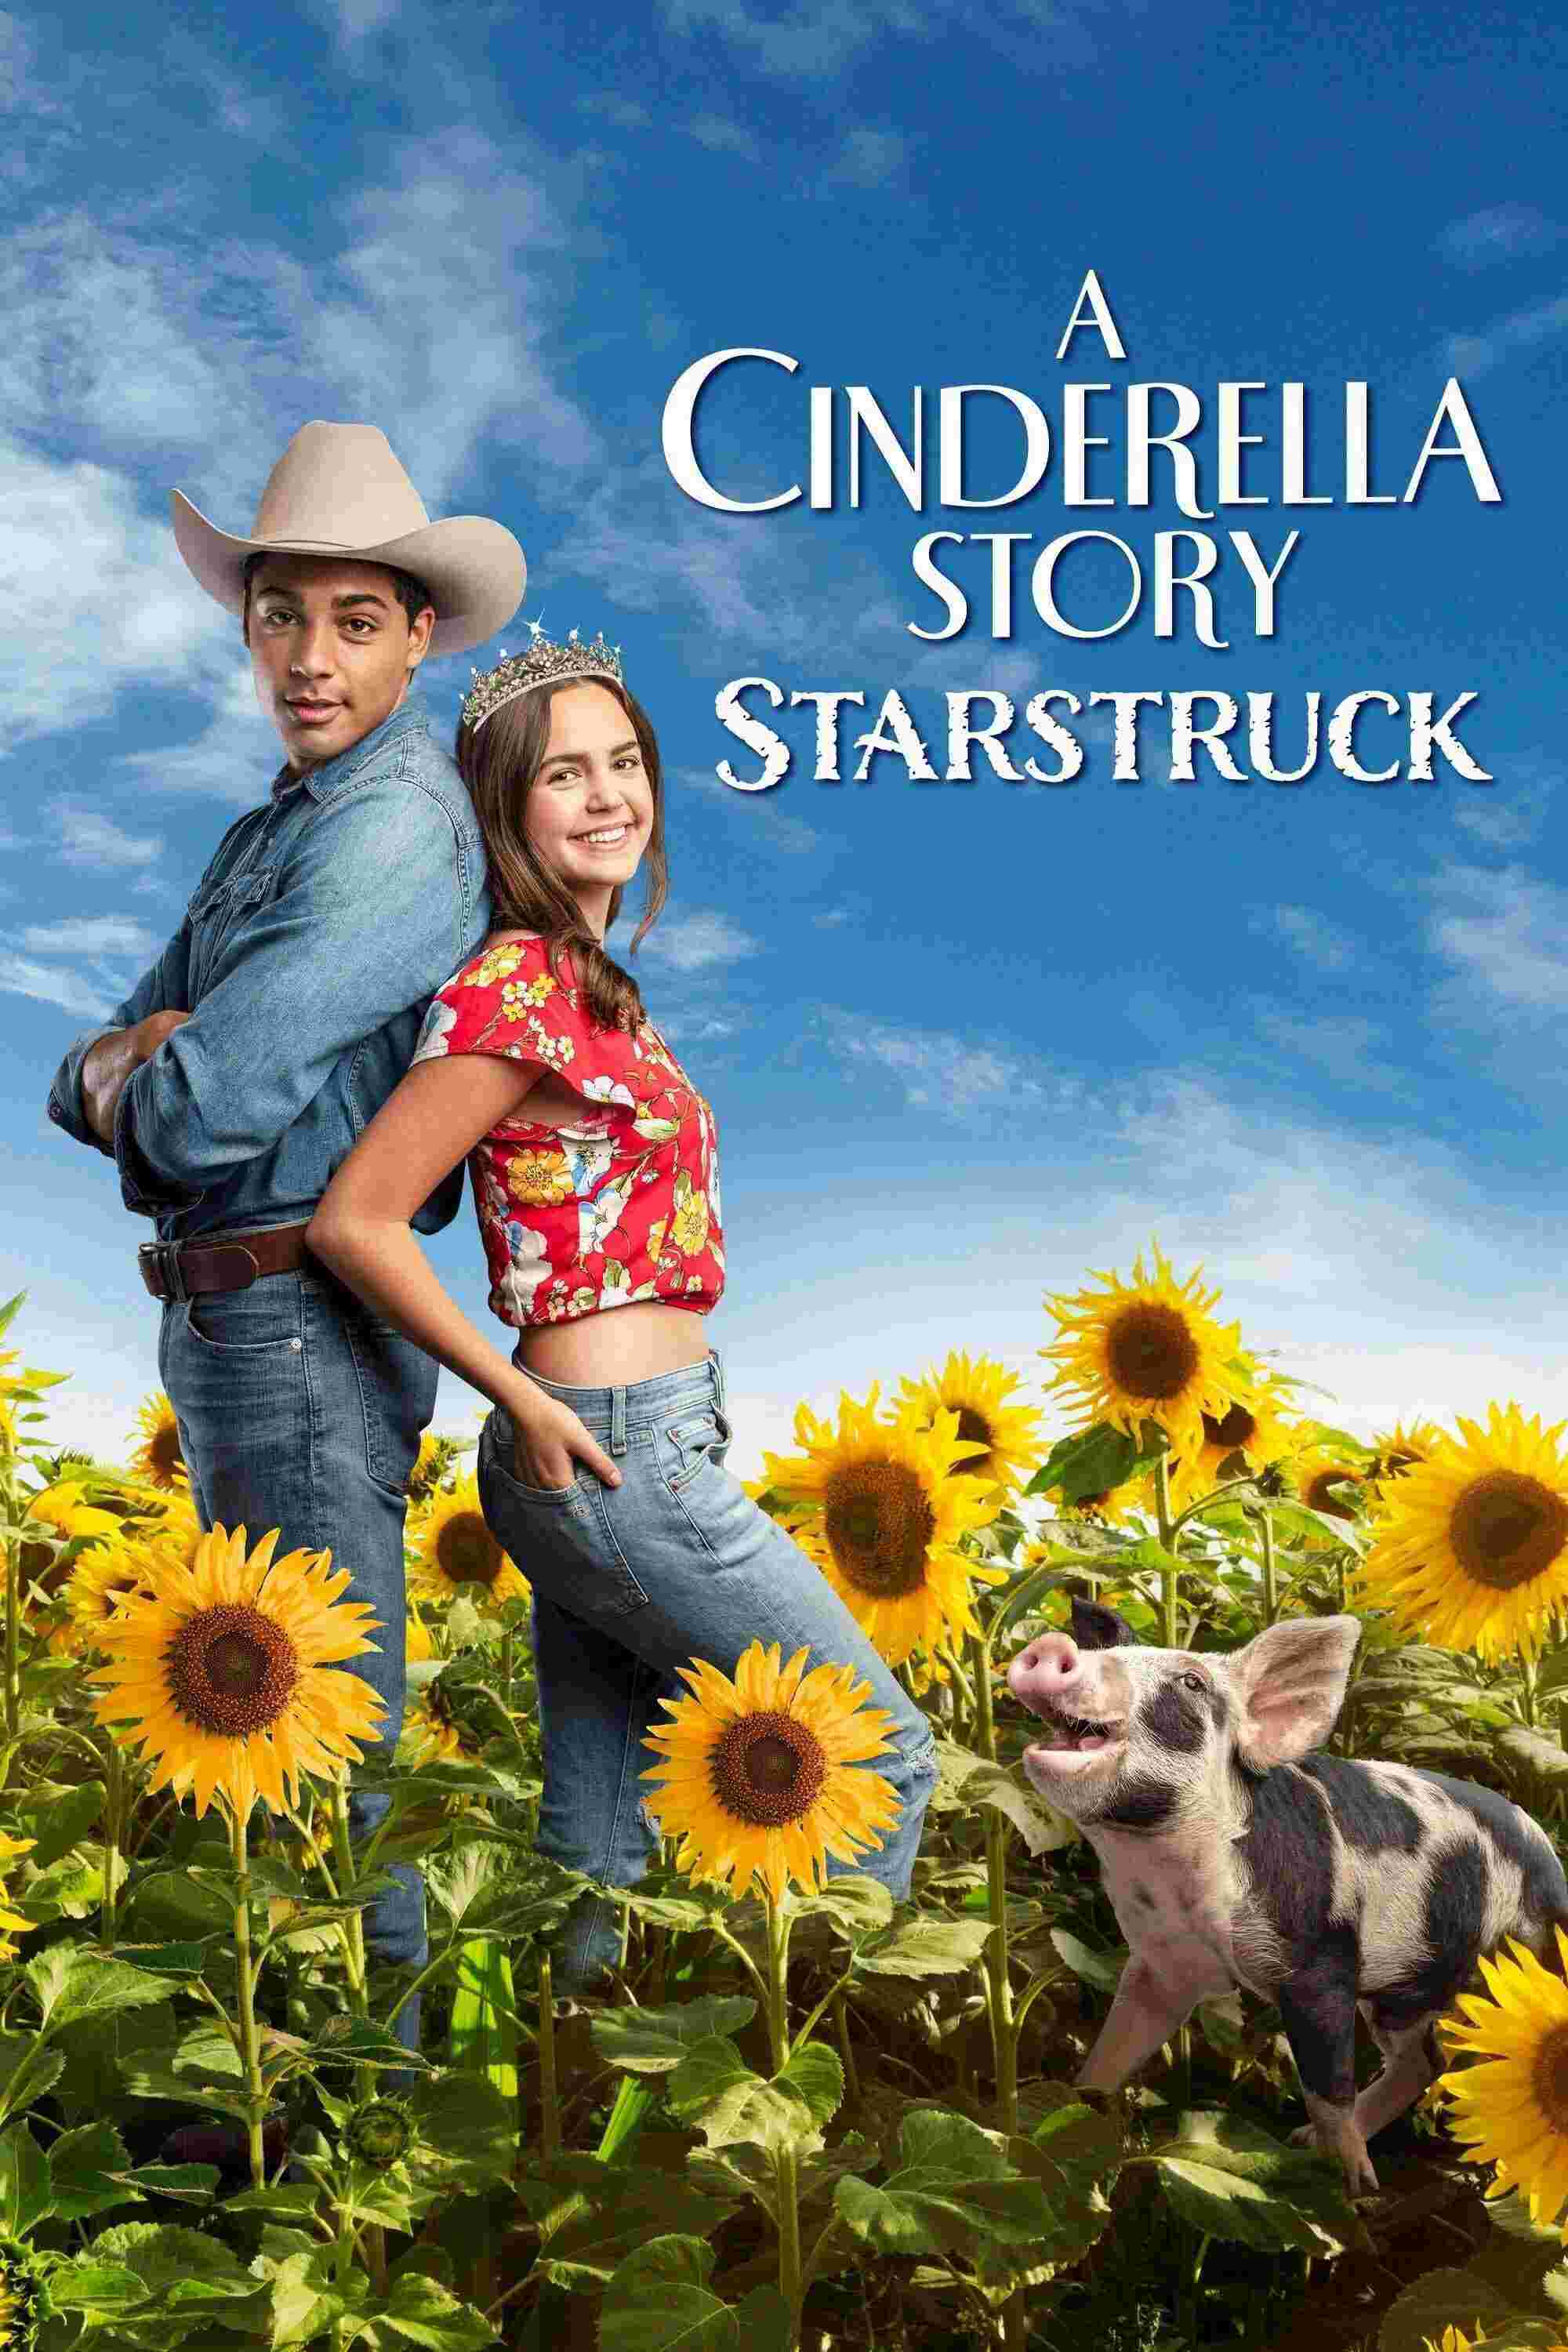 A Cinderella Story: Starstruck (2021) Bailee Madison